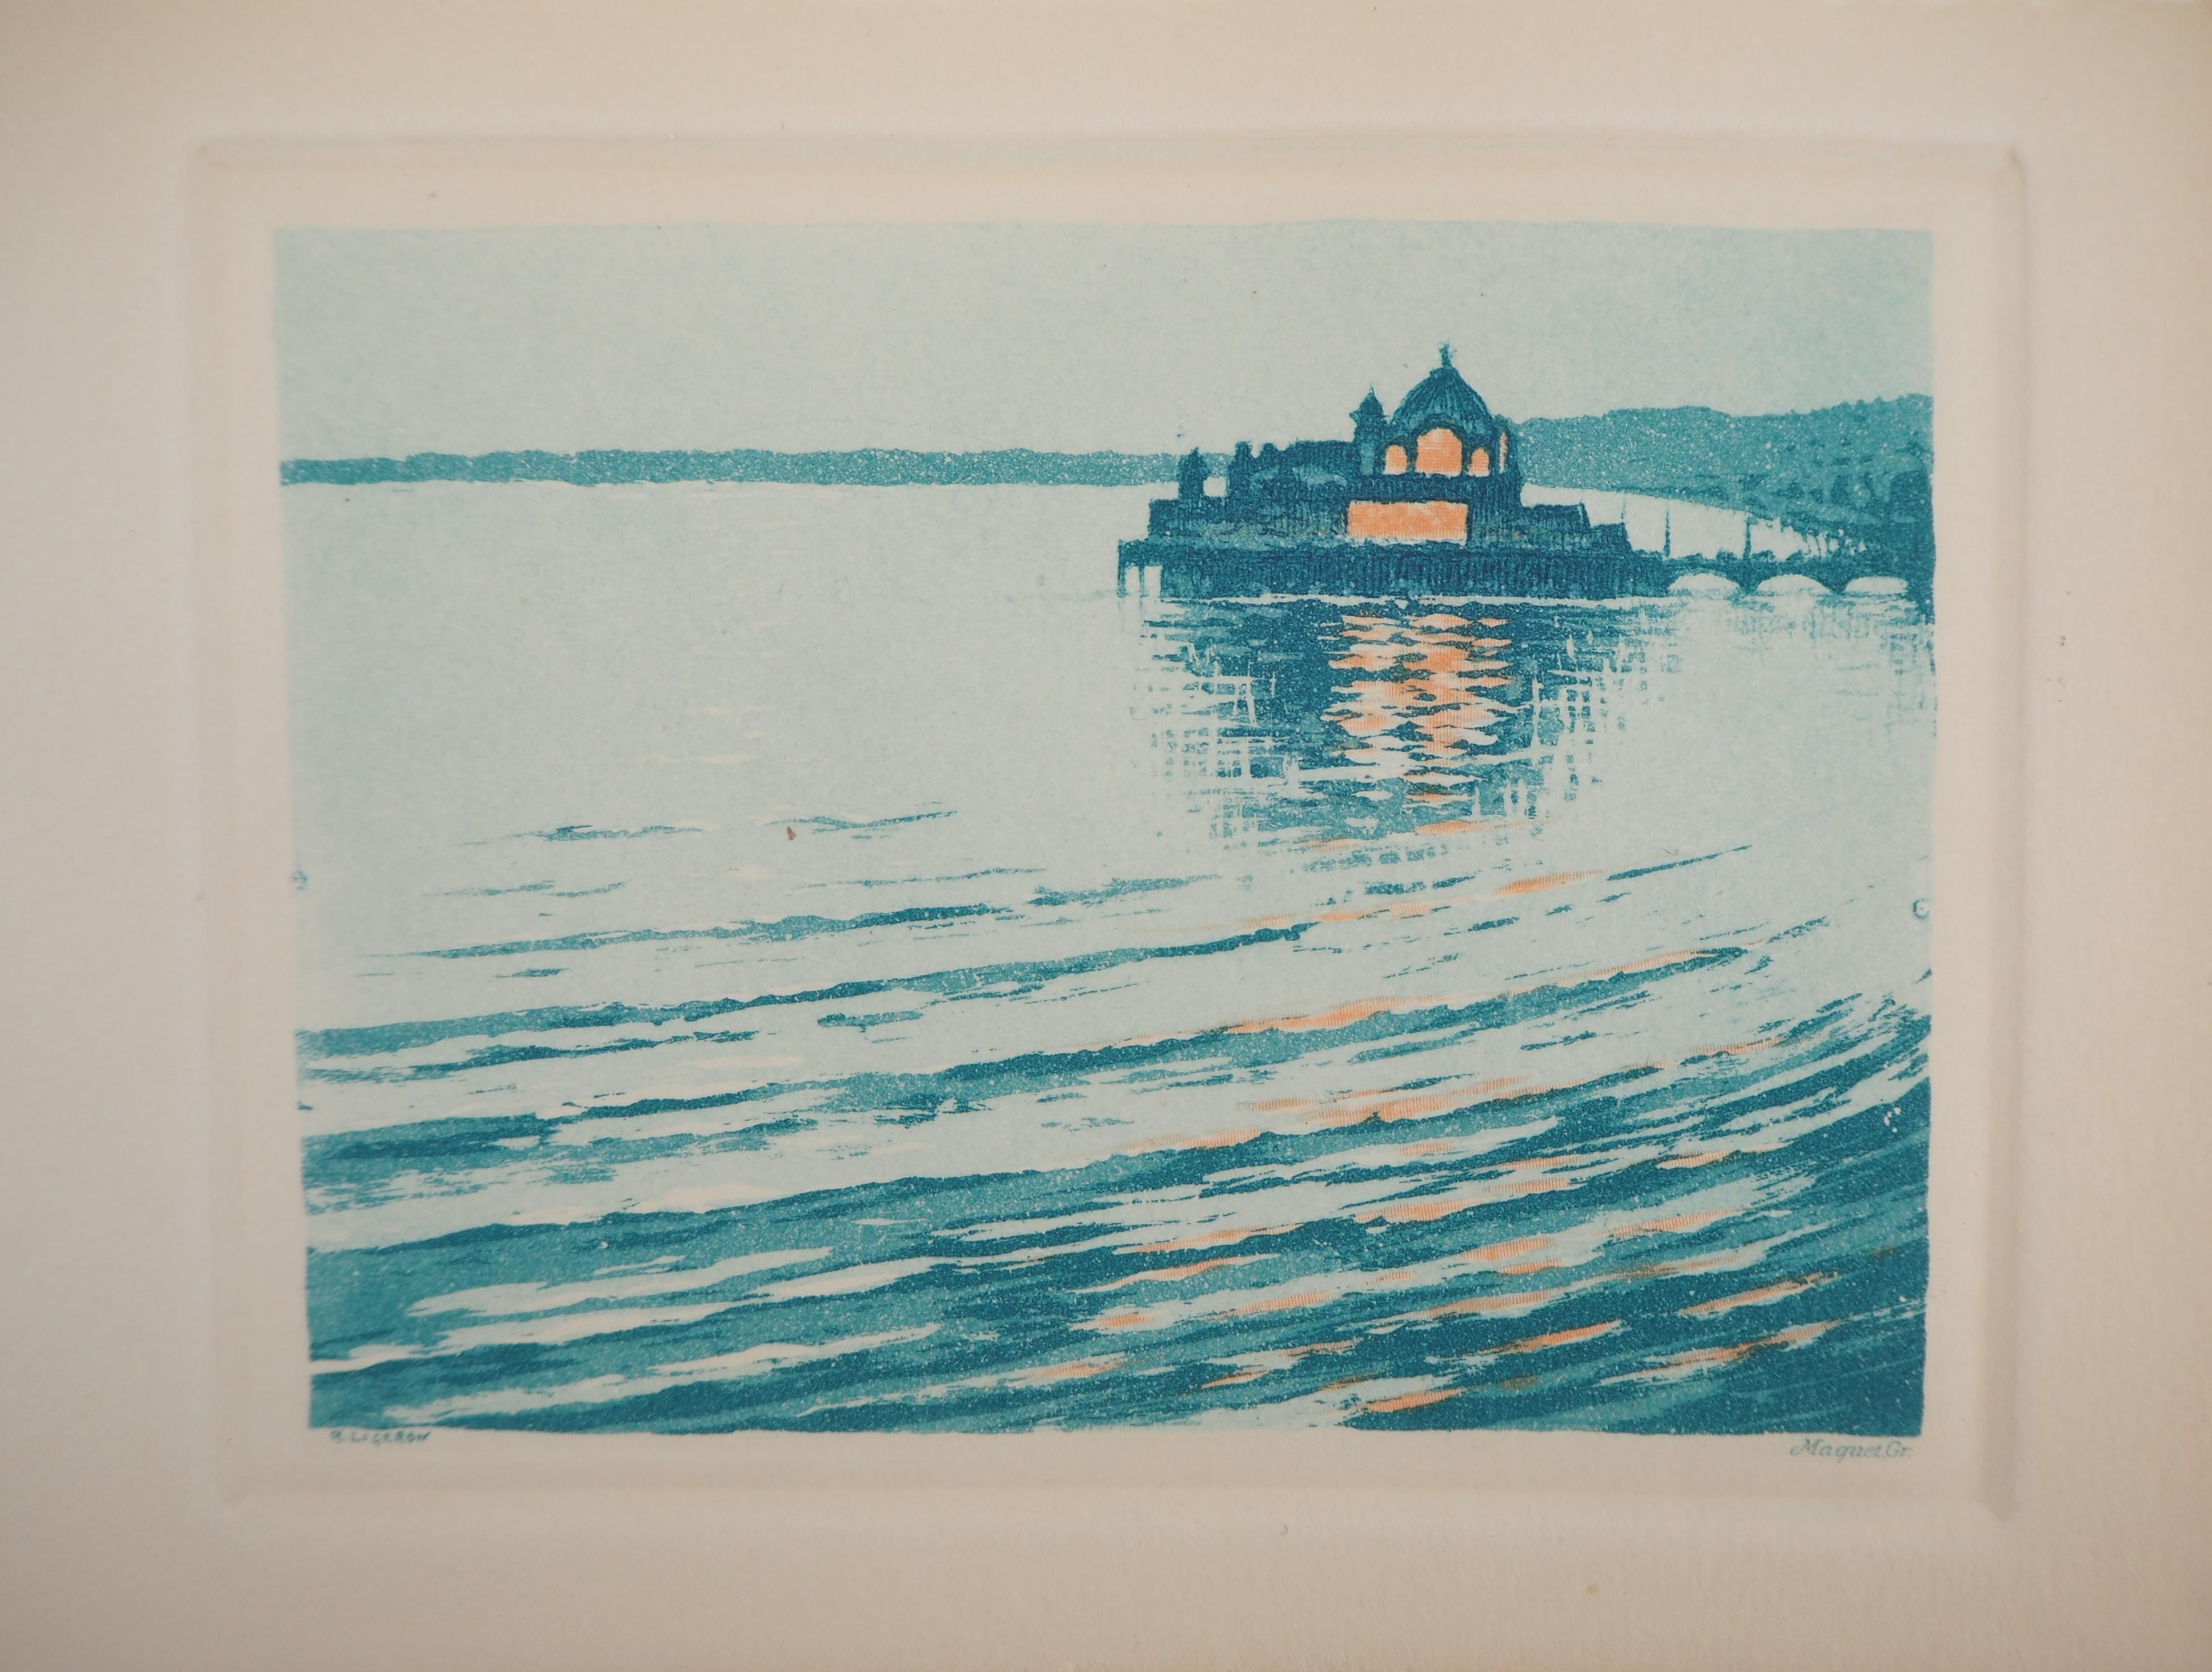 René Ligeron Landscape Print - Dream of a Small Venice - Original etching